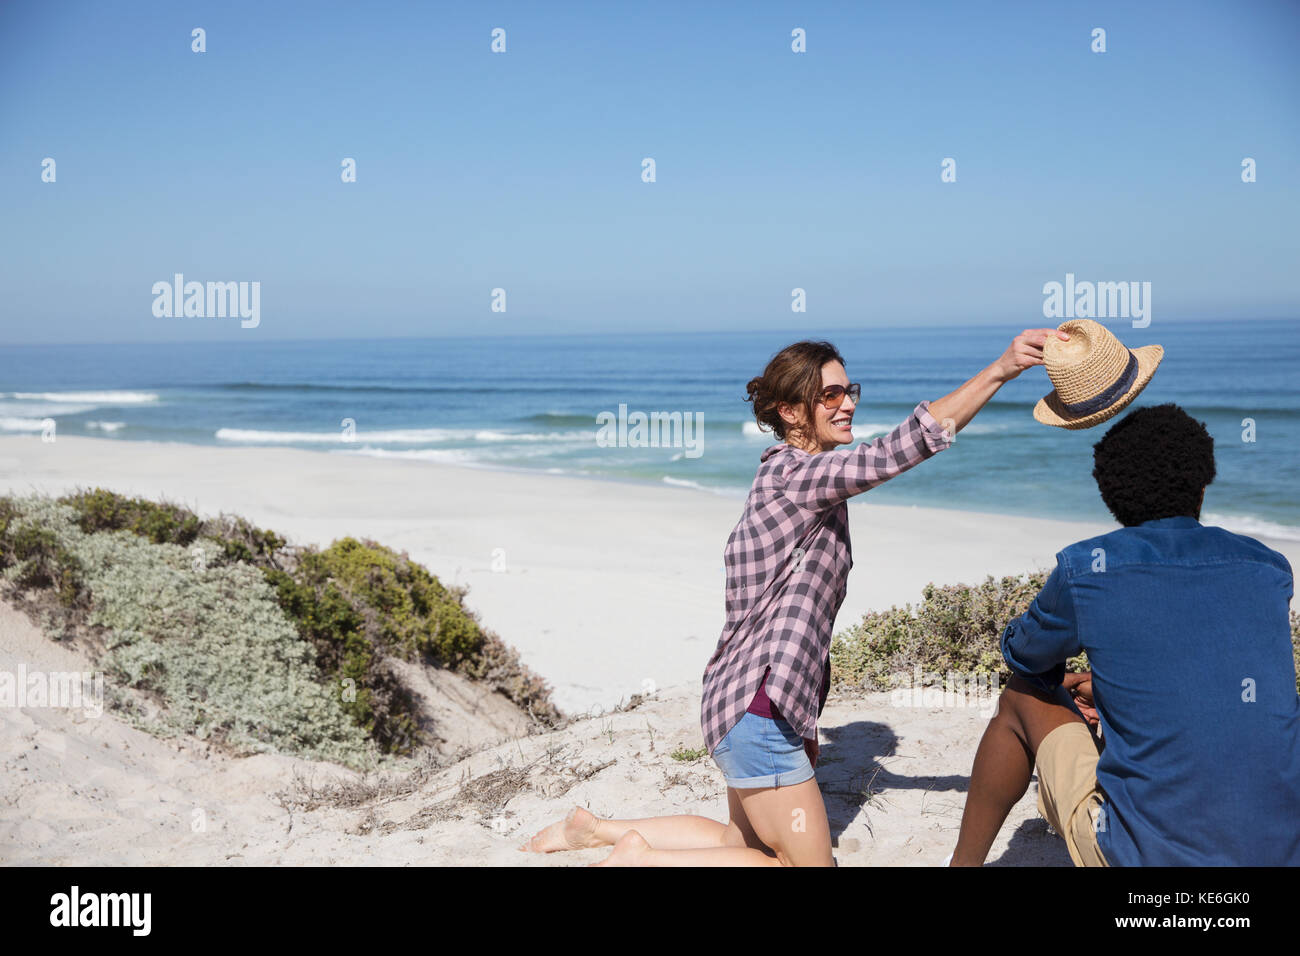 Woman placing hat on boyfriend on sunny summer ocean beach Stock Photo